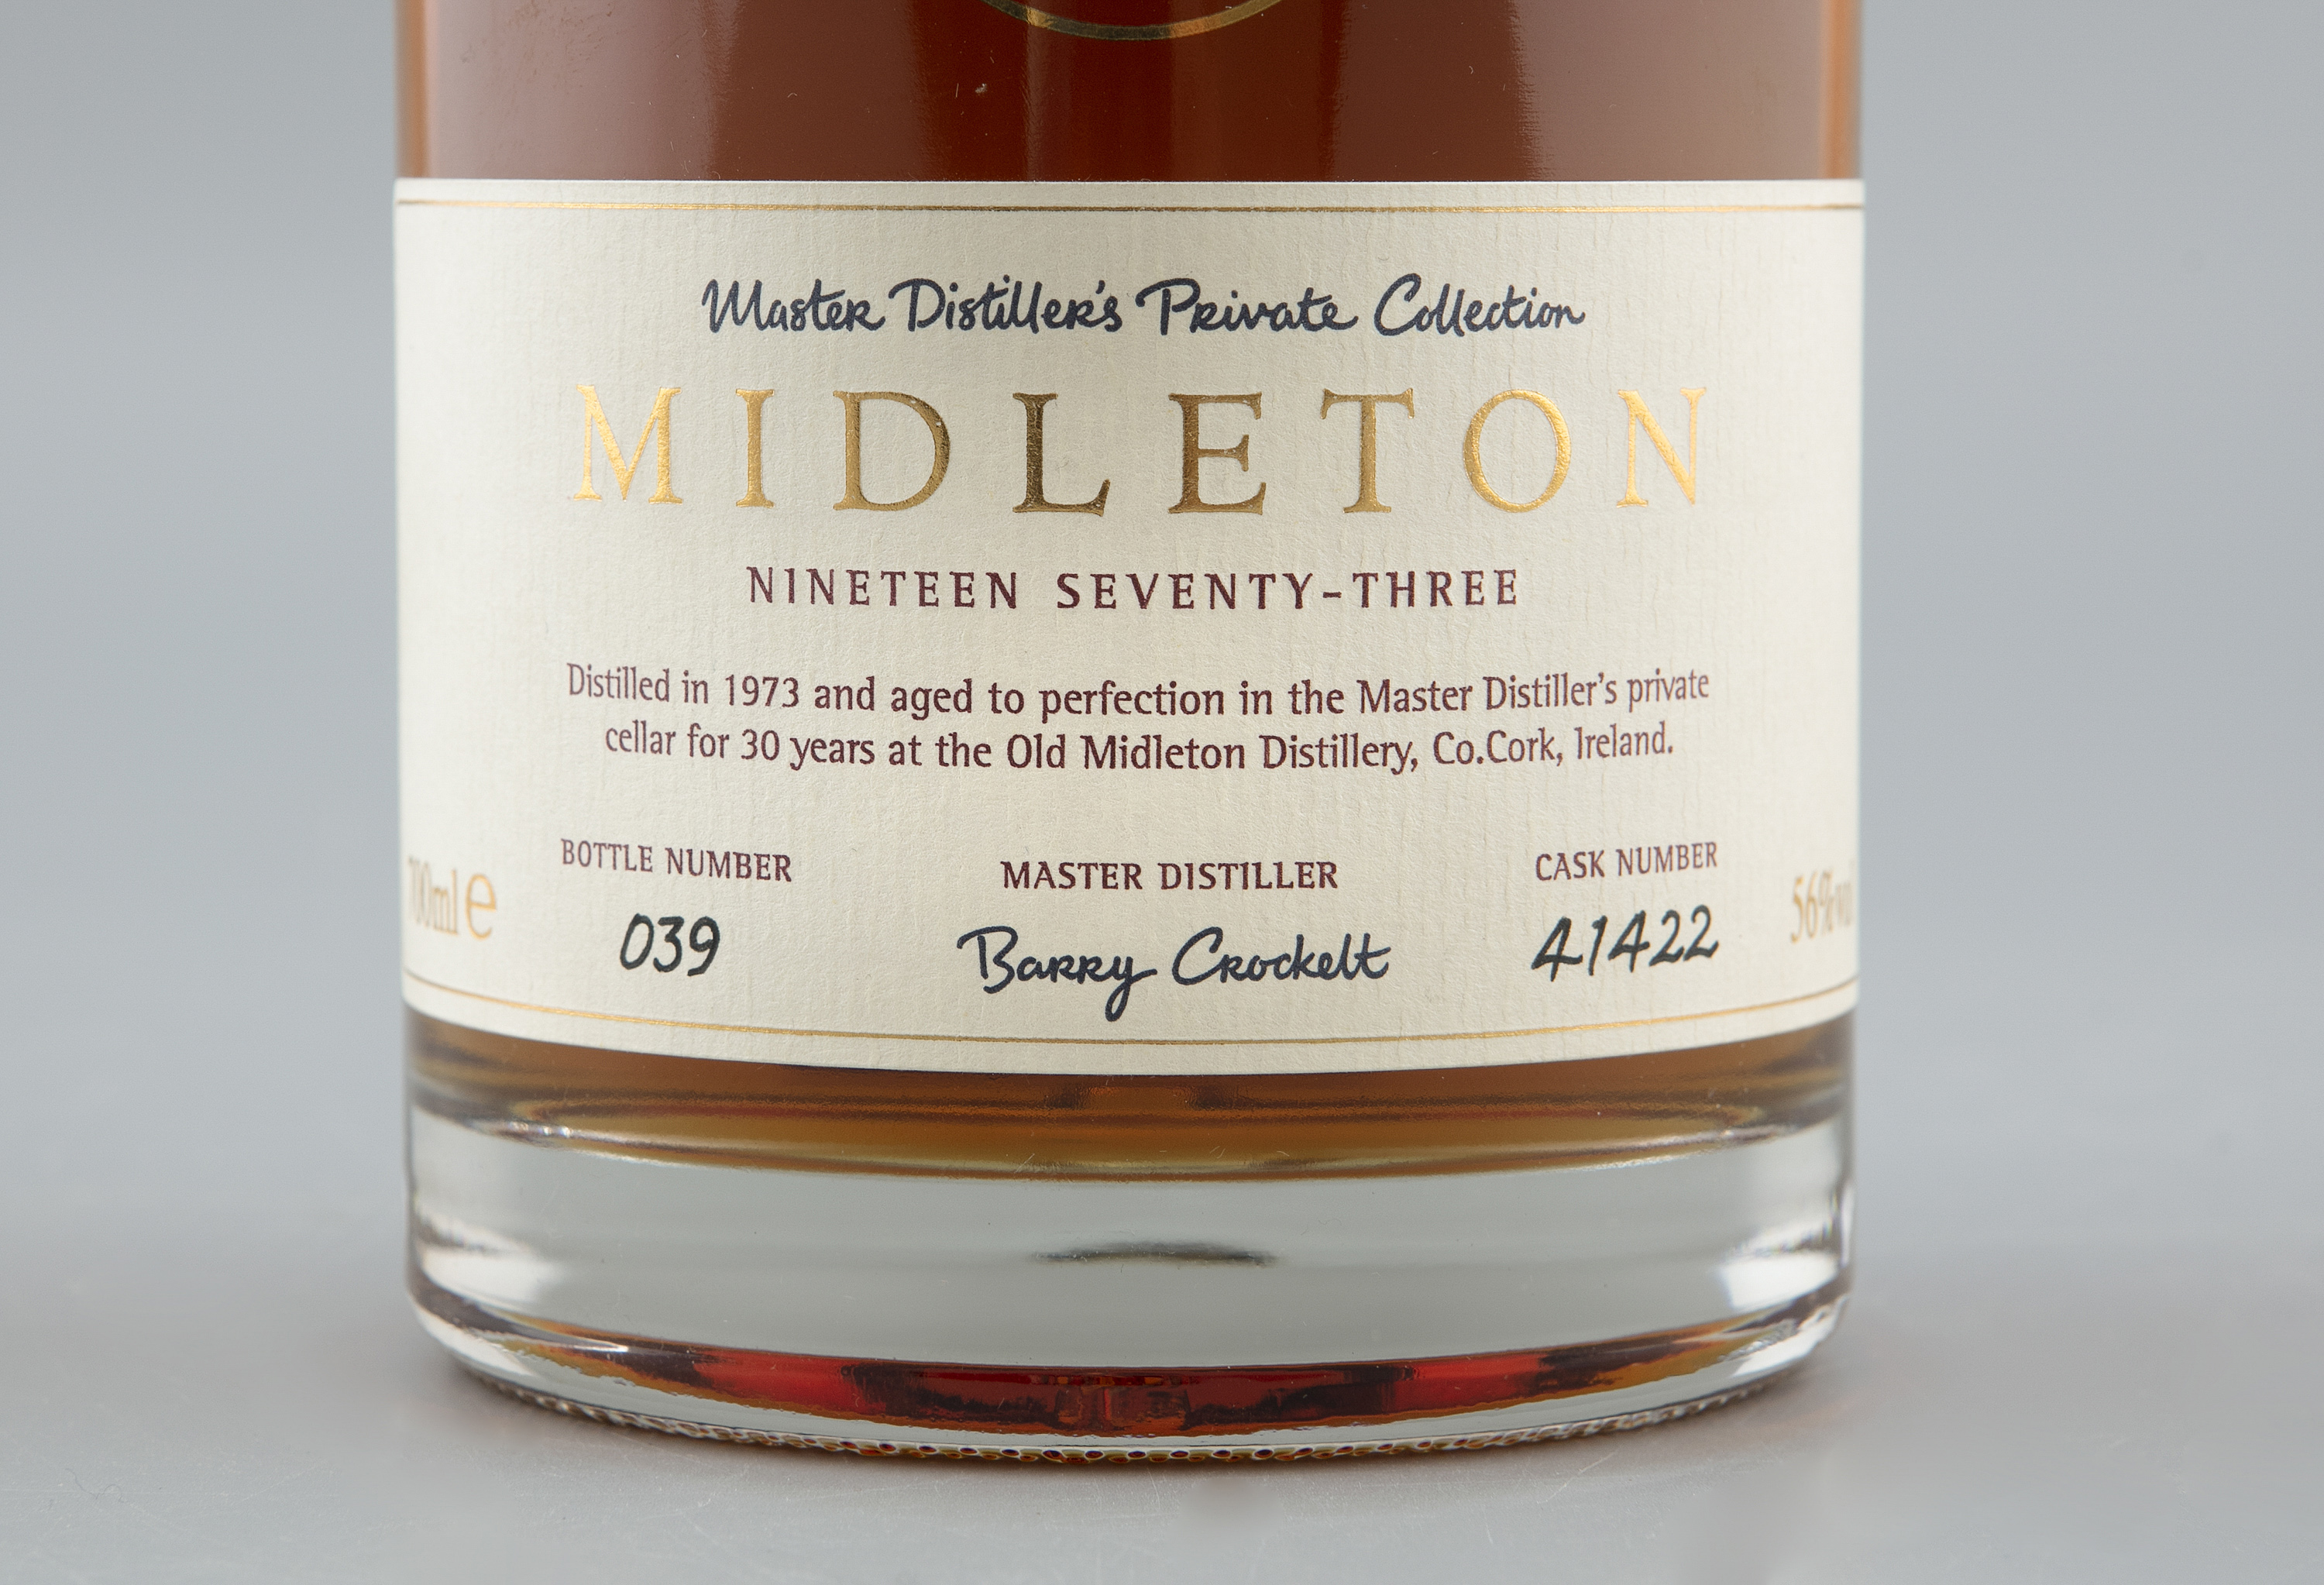 Midleton 25 Year Old Pure Pot Still Irish Whiskey 1 bottle in presentation case, bottle number 039 - Image 10 of 11